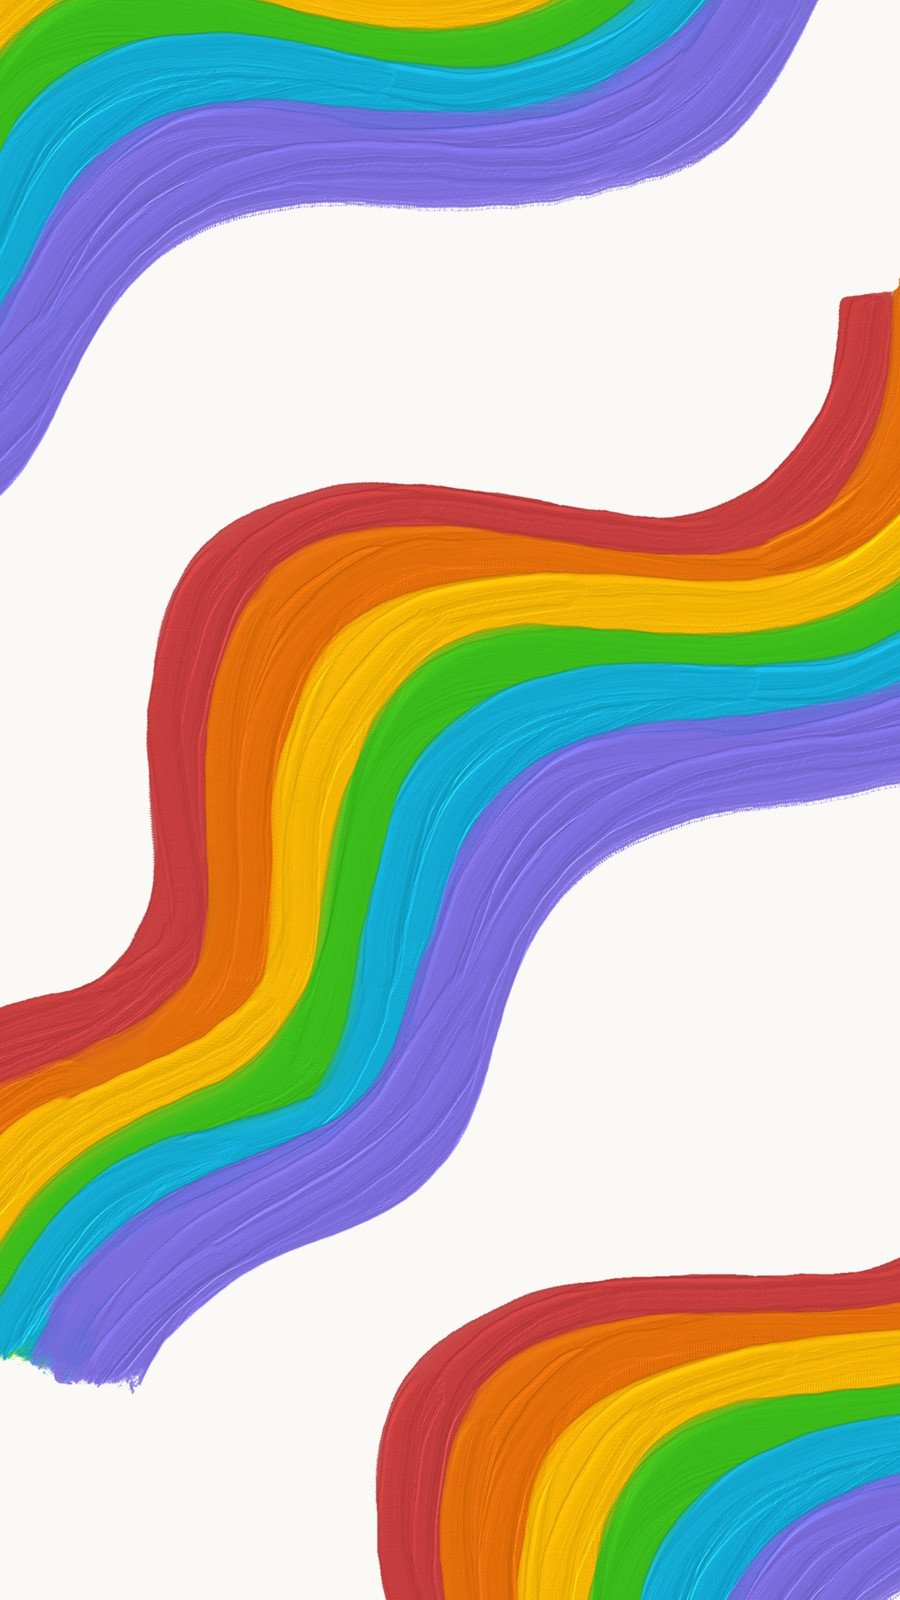 Free and customizable rainbow templates